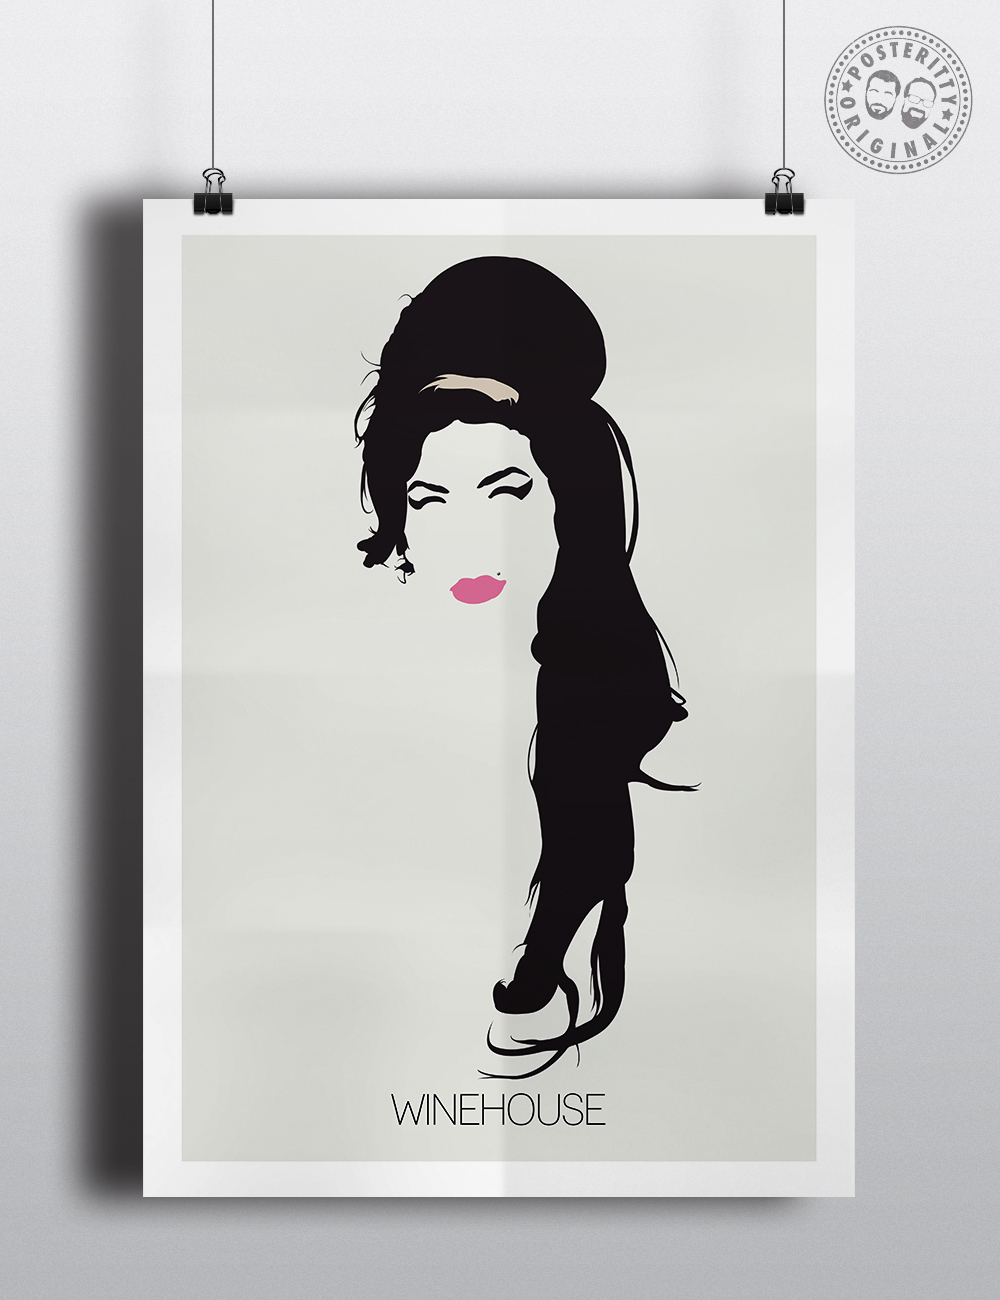 https://static1.squarespace.com/static/553e1e3ae4b0c7db85dc4fb3/568d0a650ab377164ea59940/55425cdce4b067d5d2c480c4/1430412522439/Amy_Winehouse_Minimalist_Poster_Music.jpg?format=1000w